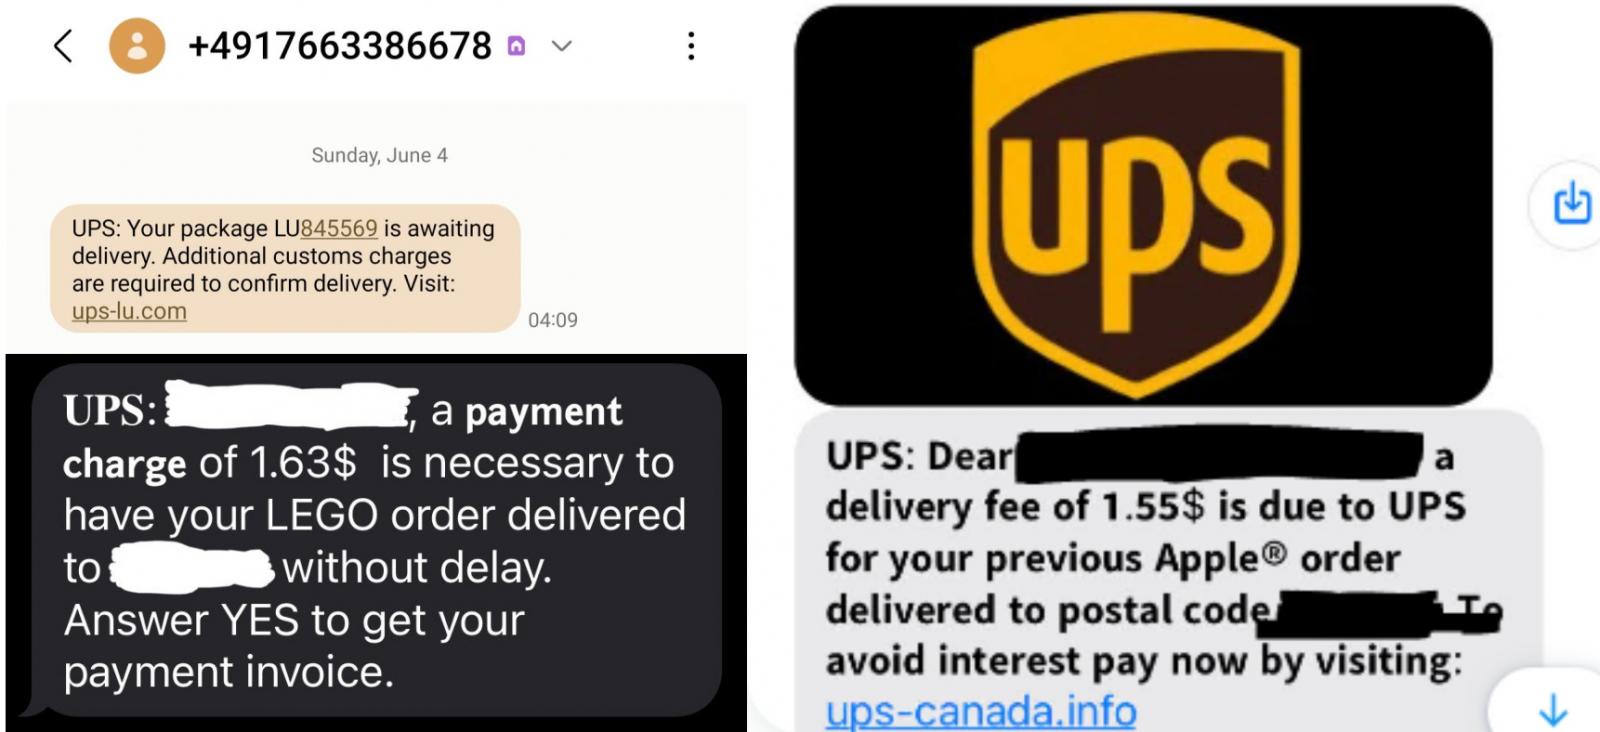 UPS SMS phishing samples